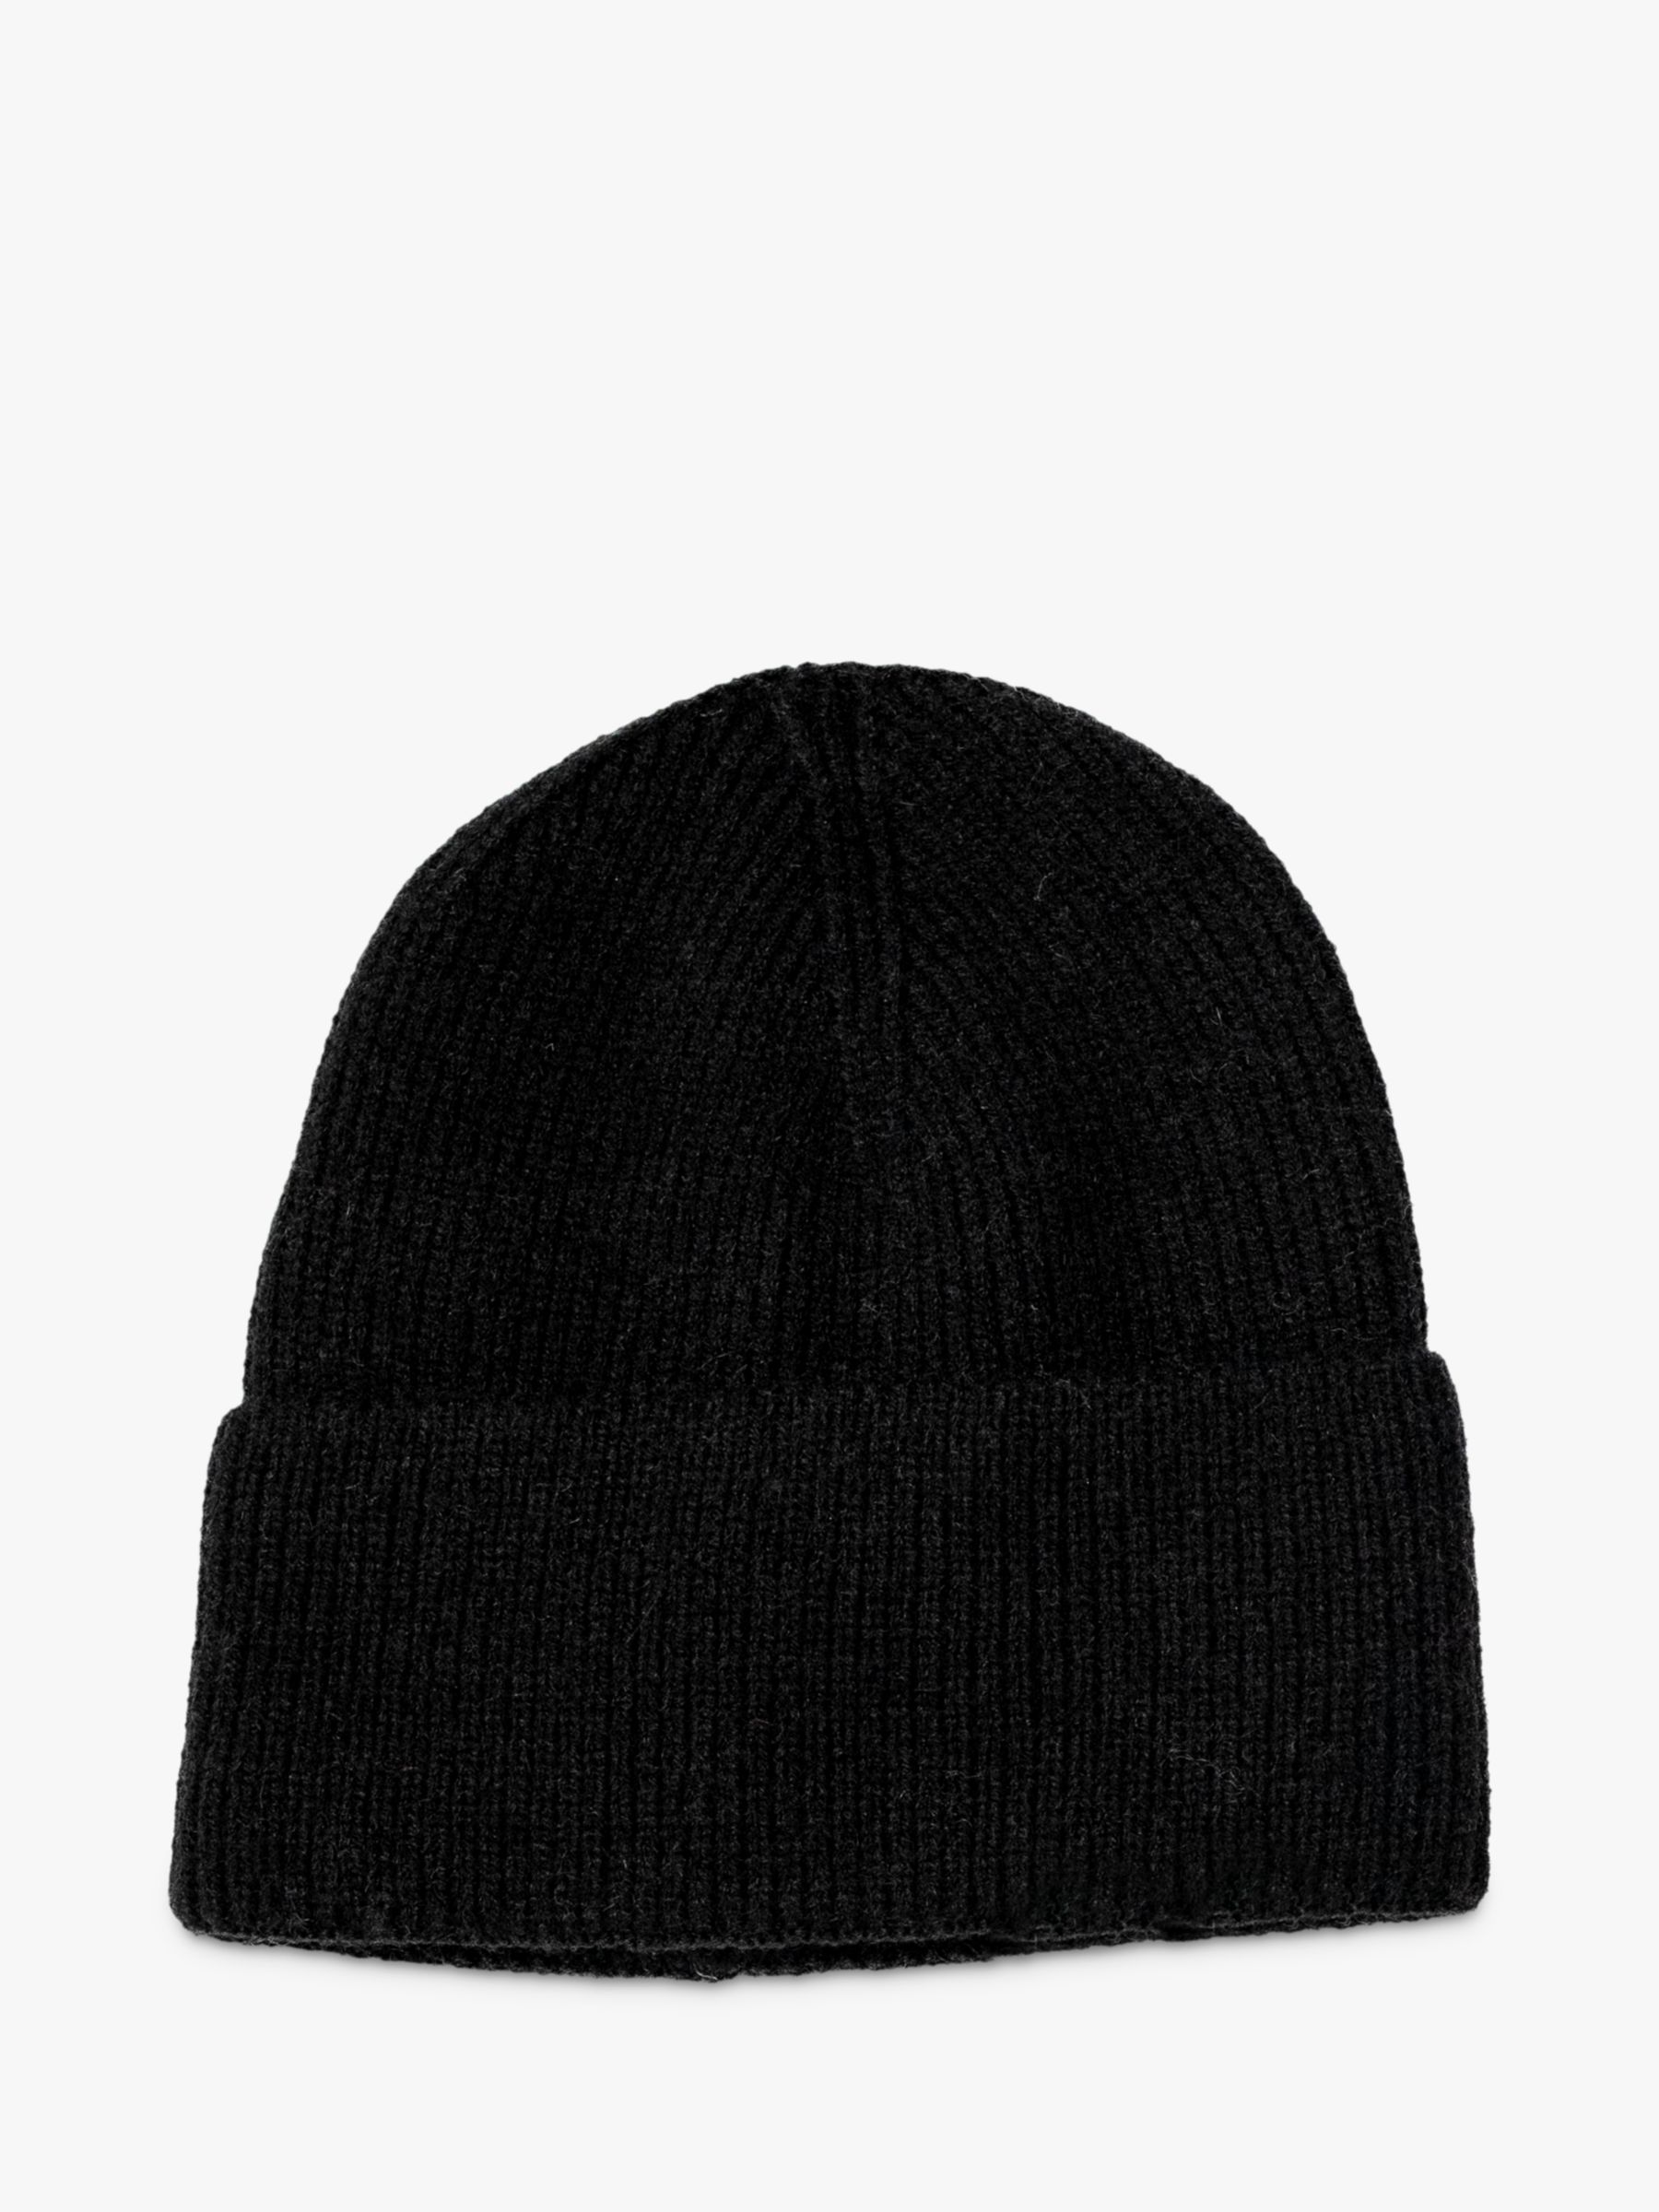 Bloom & Bay Laurel Rib Knit Beanie Hat, Black, One Size